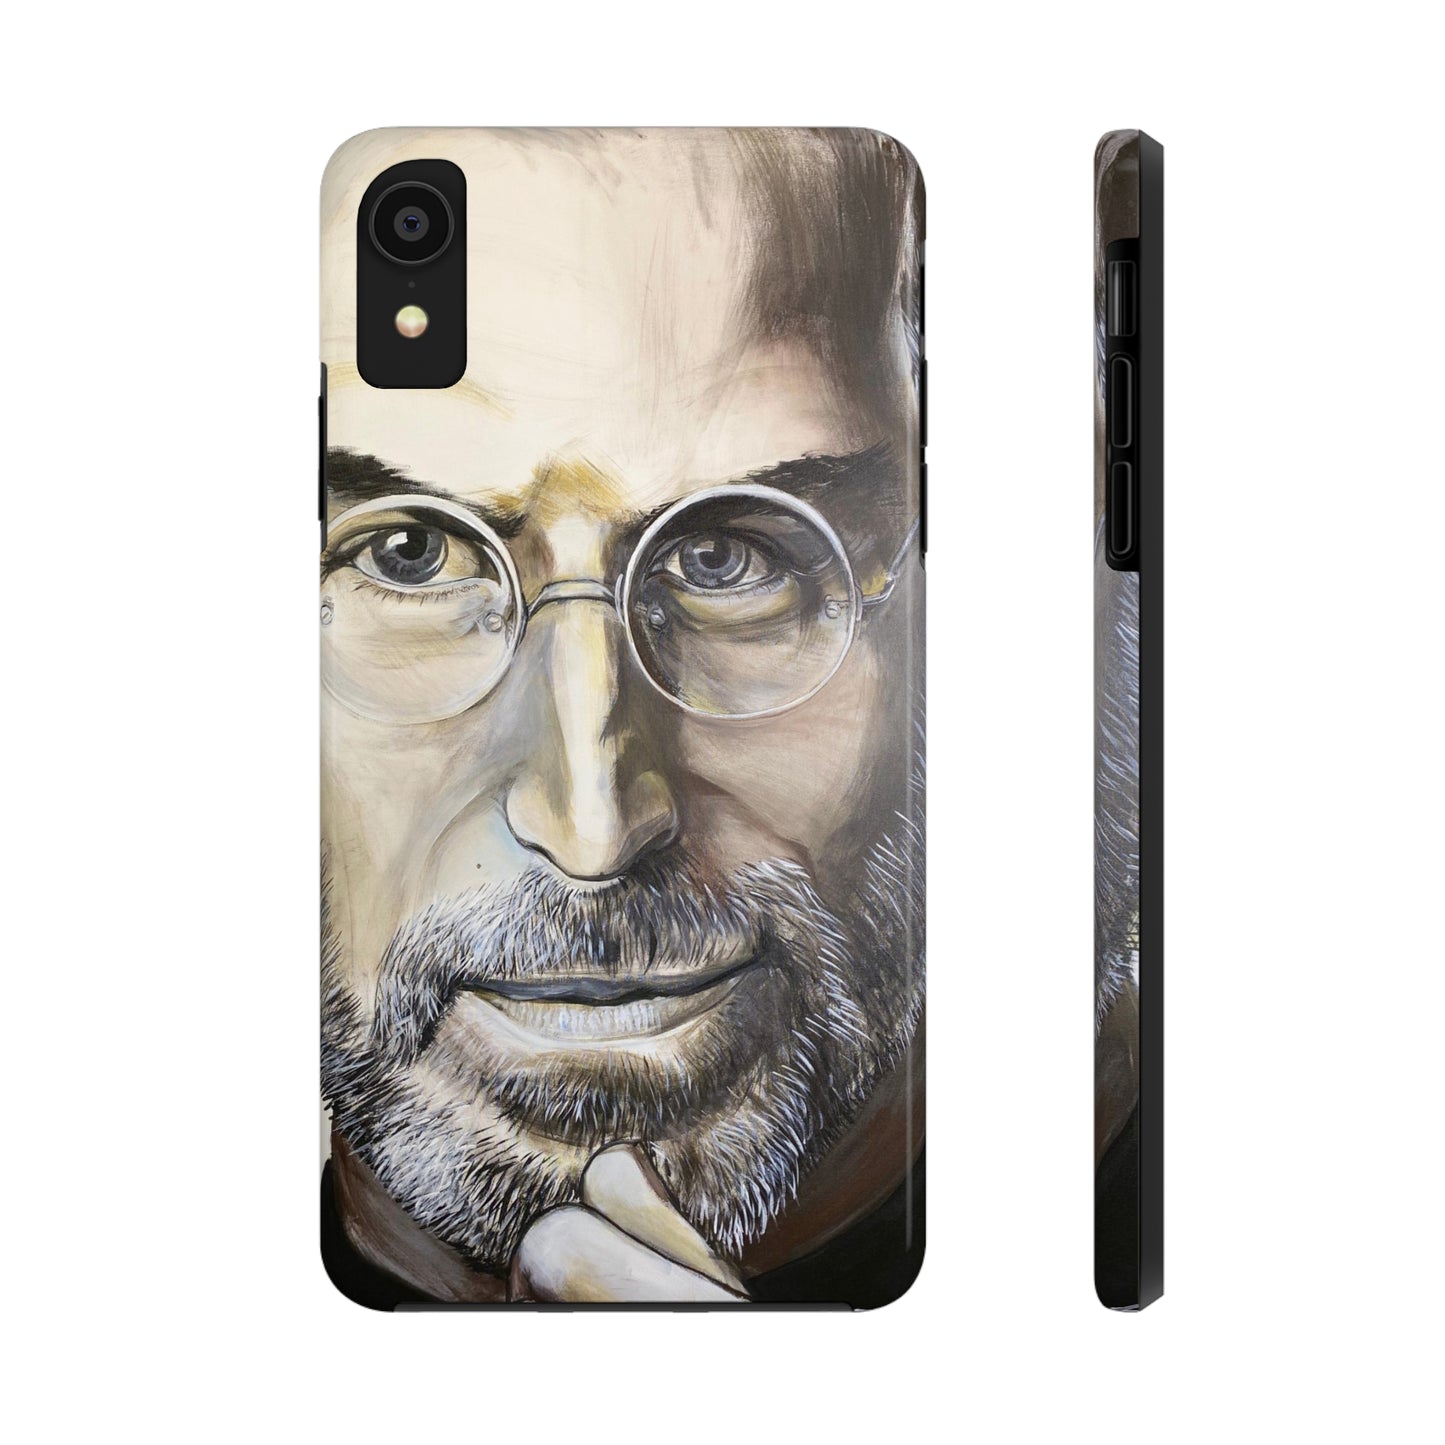 Case Mate Tough Phone Cases Featuring Steve Jobs fan art by #ShallyBrady